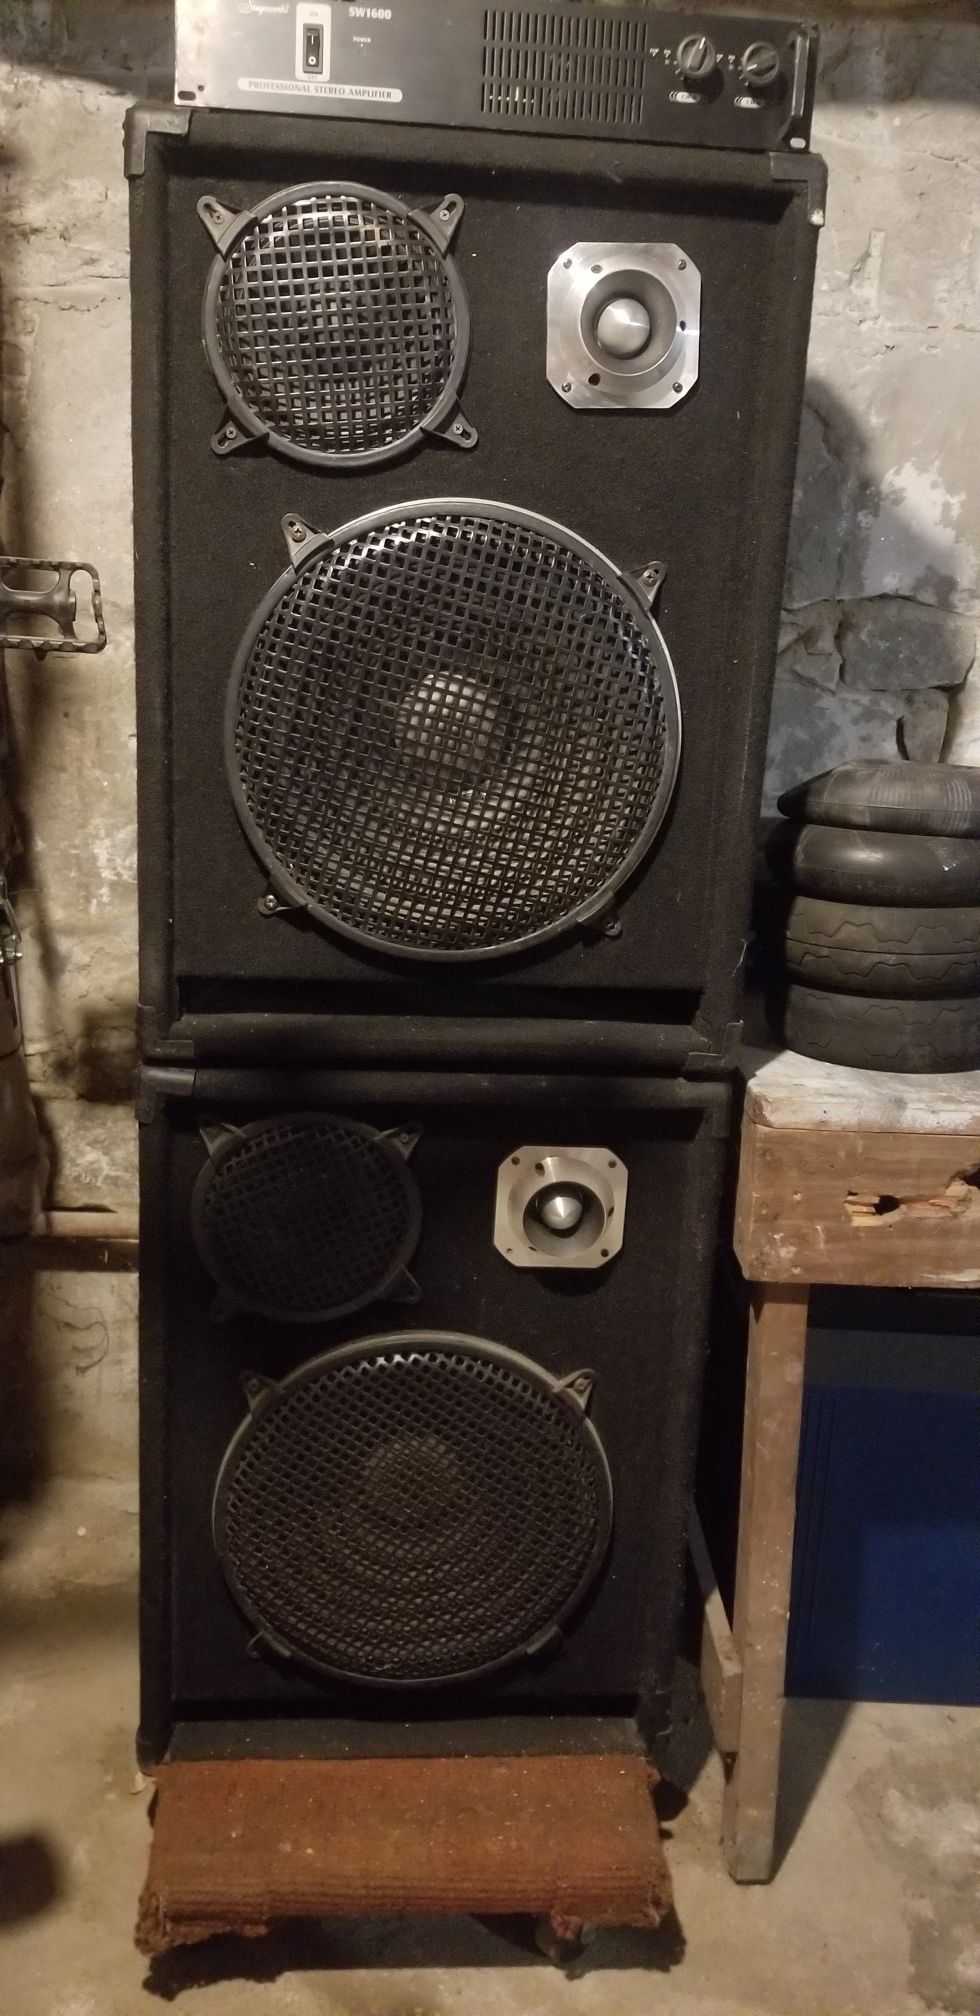 Club / dj speakers and amplifier